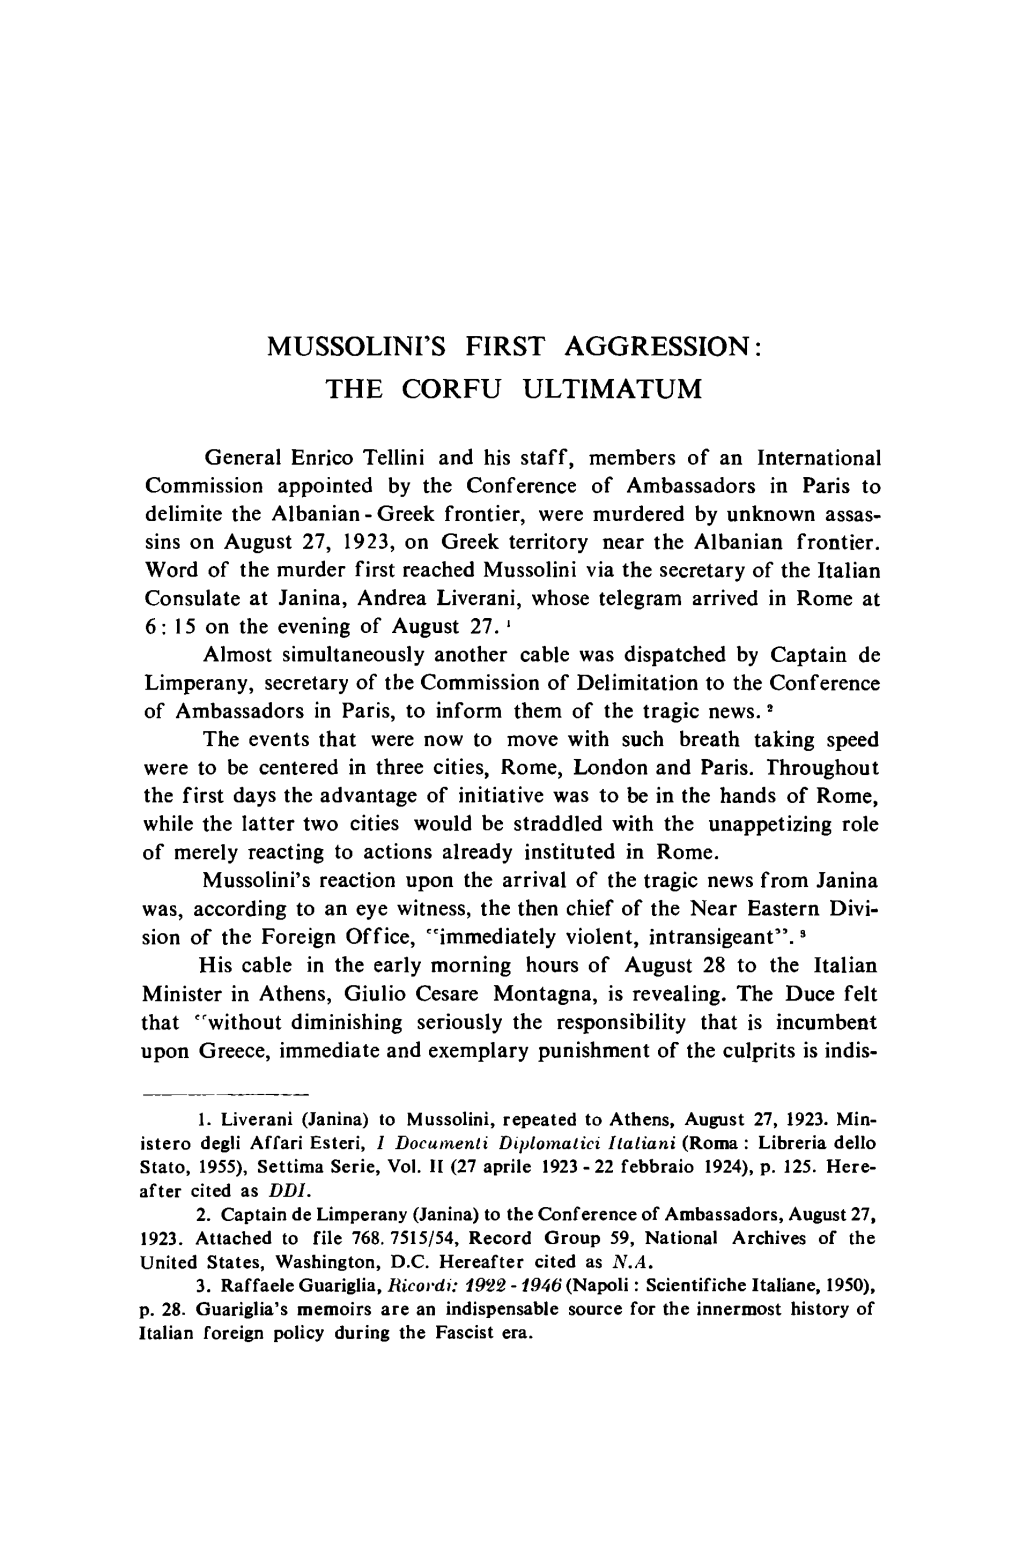 Mussolini's First Aggression: the Corfu Ultimatum